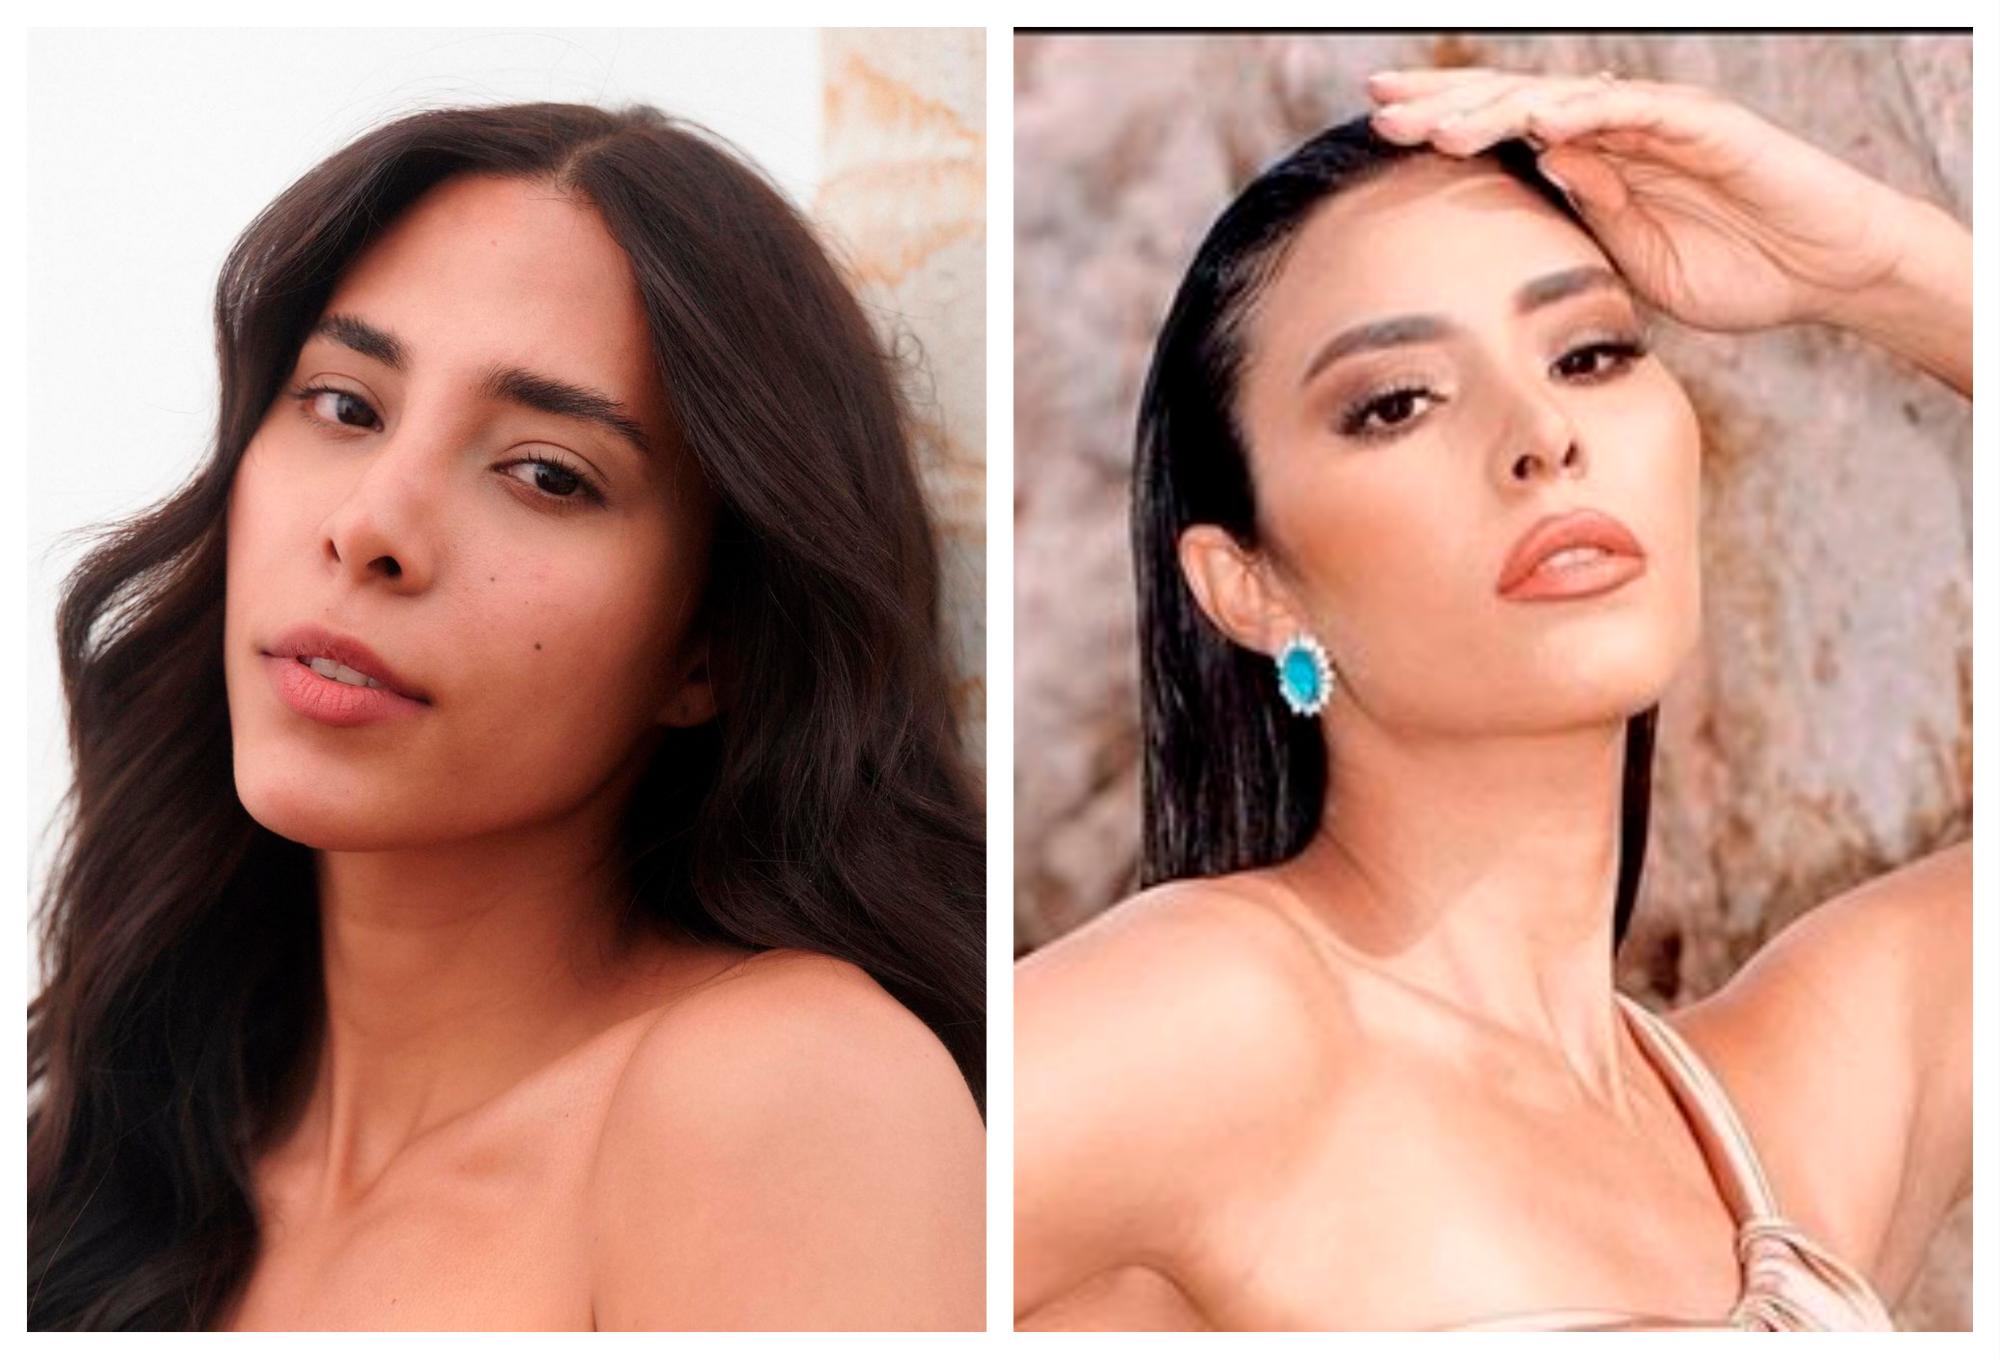 Al natural! | Así lucen las candidatas a Miss Universo sin maquillaje -  Diario Libre